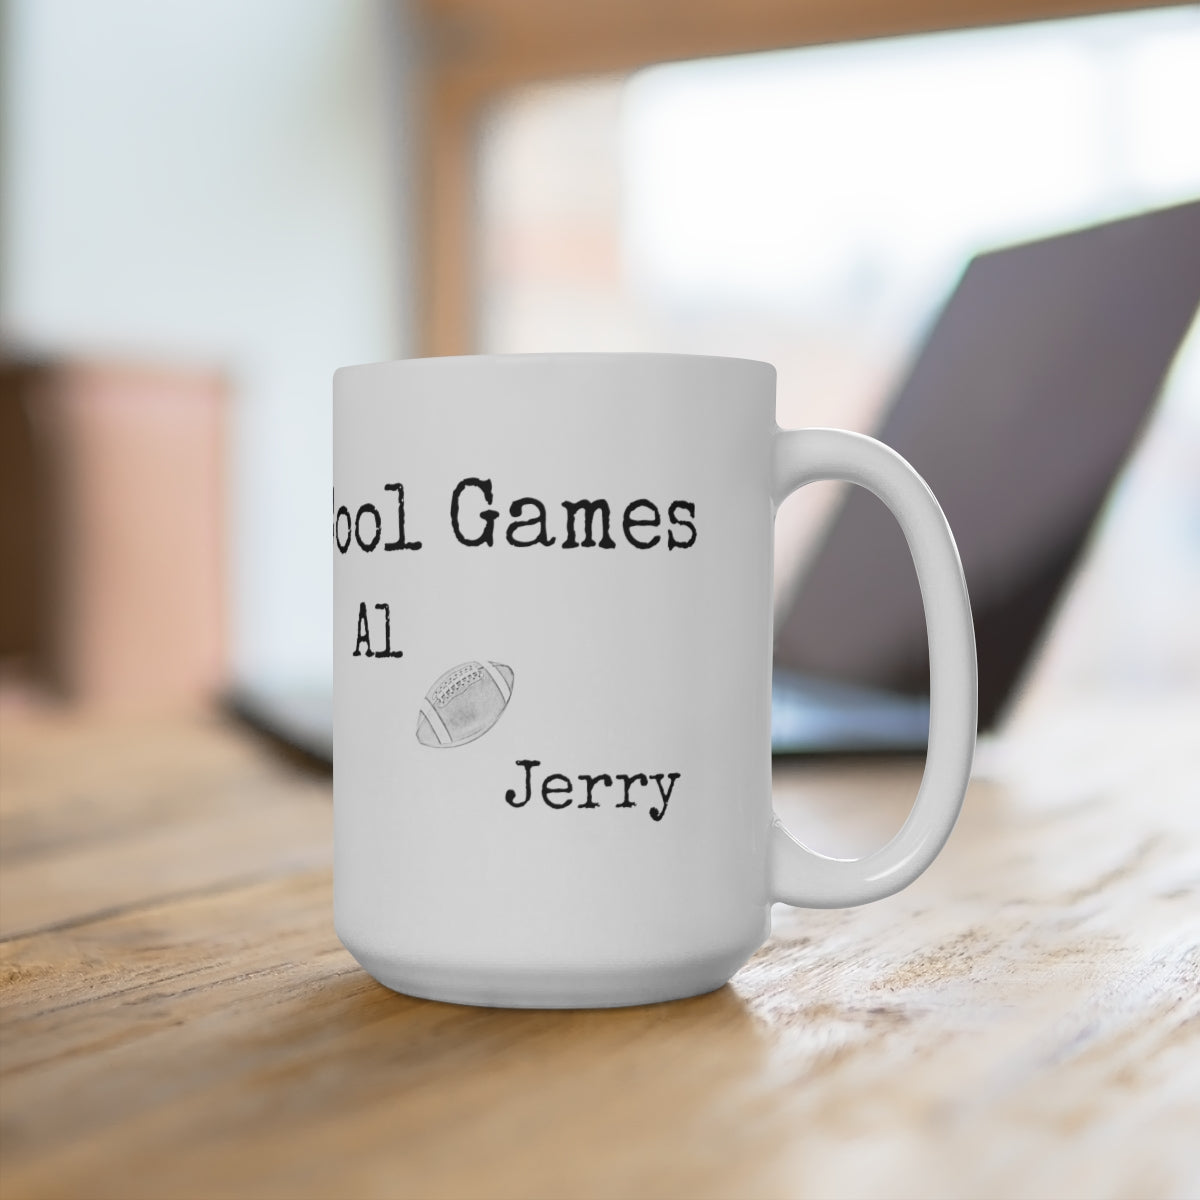 Al & Jerry "Cool Games" Coffee Mug 15oz